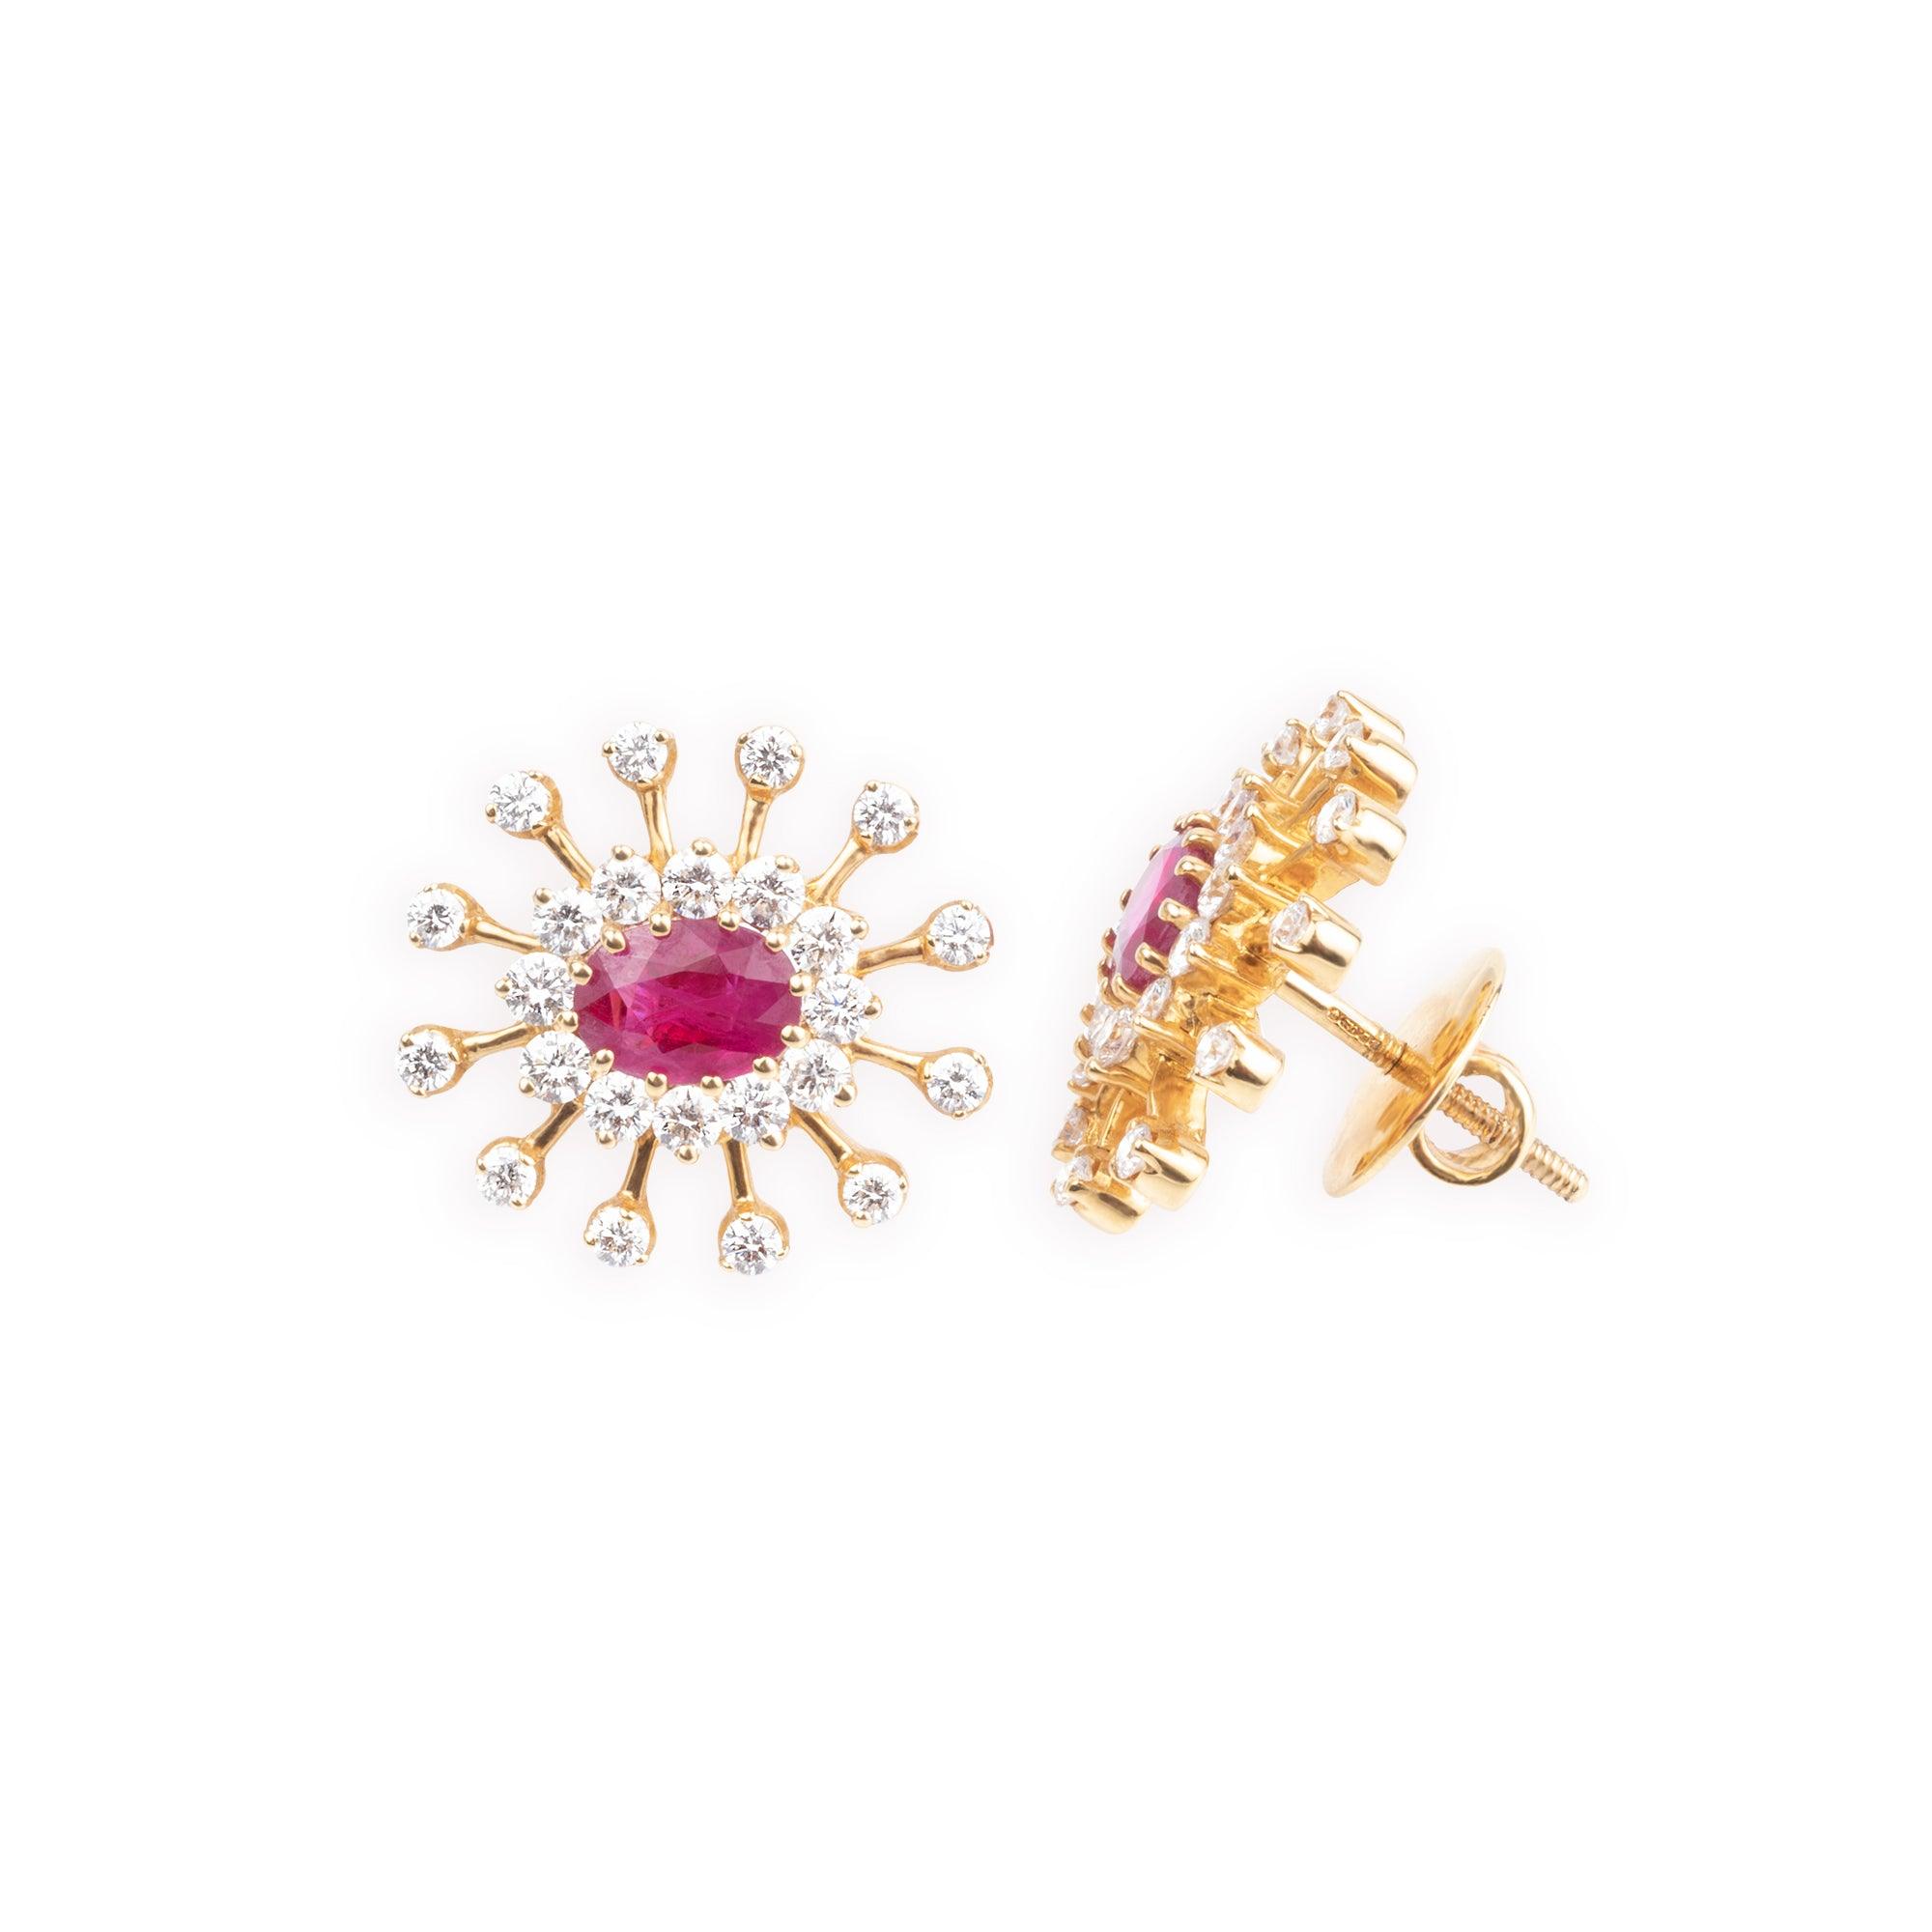 18ct Yellow Gold Diamond & Ruby Earrings E-4419